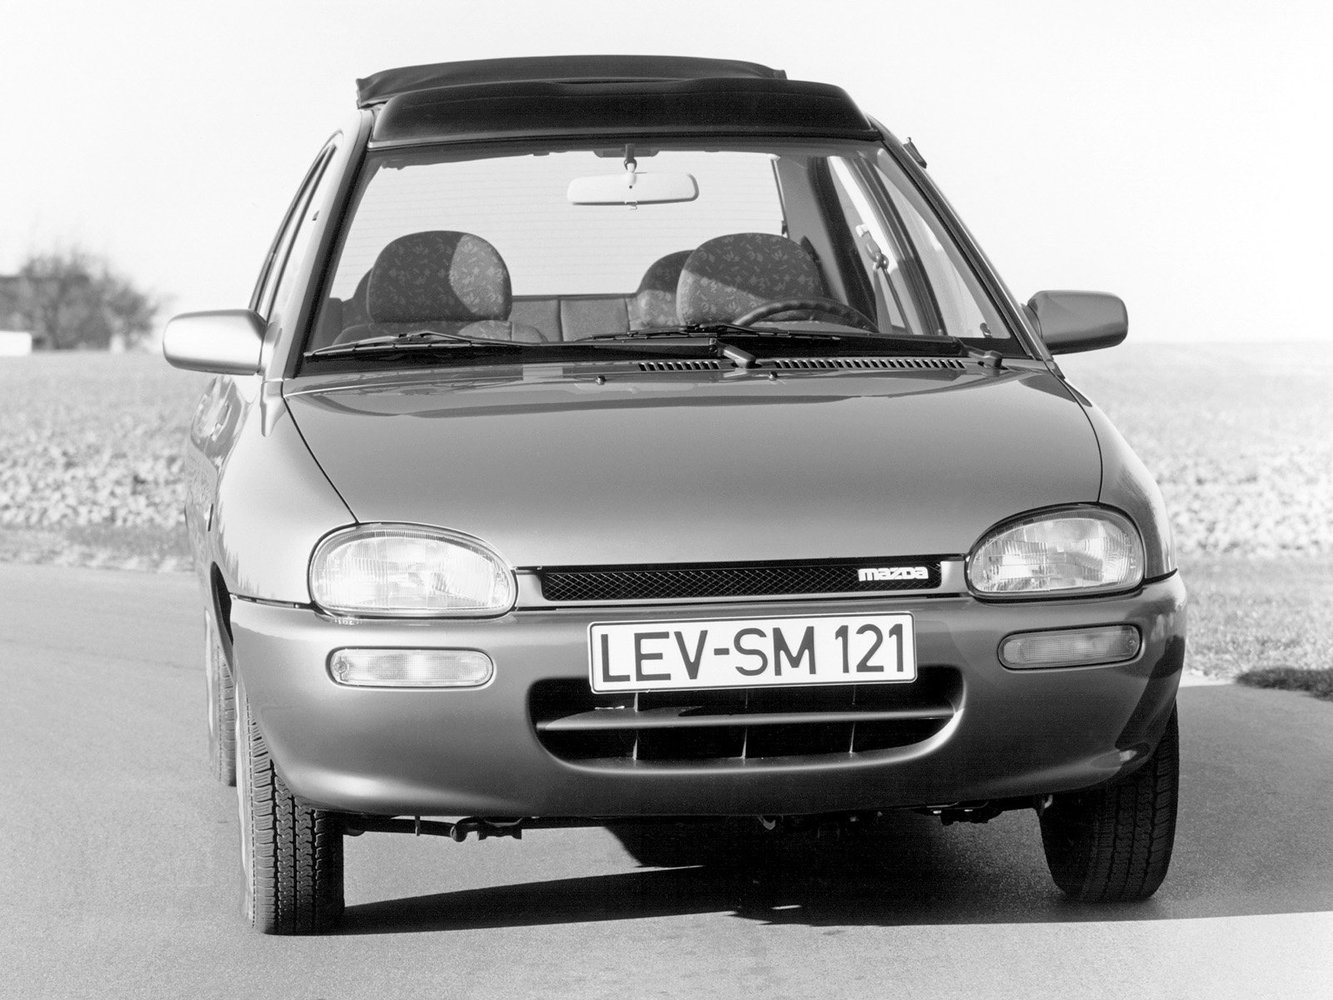 седан Mazda 121 1991 - 1998г выпуска модификация 1.3 MT (54 л.с.)